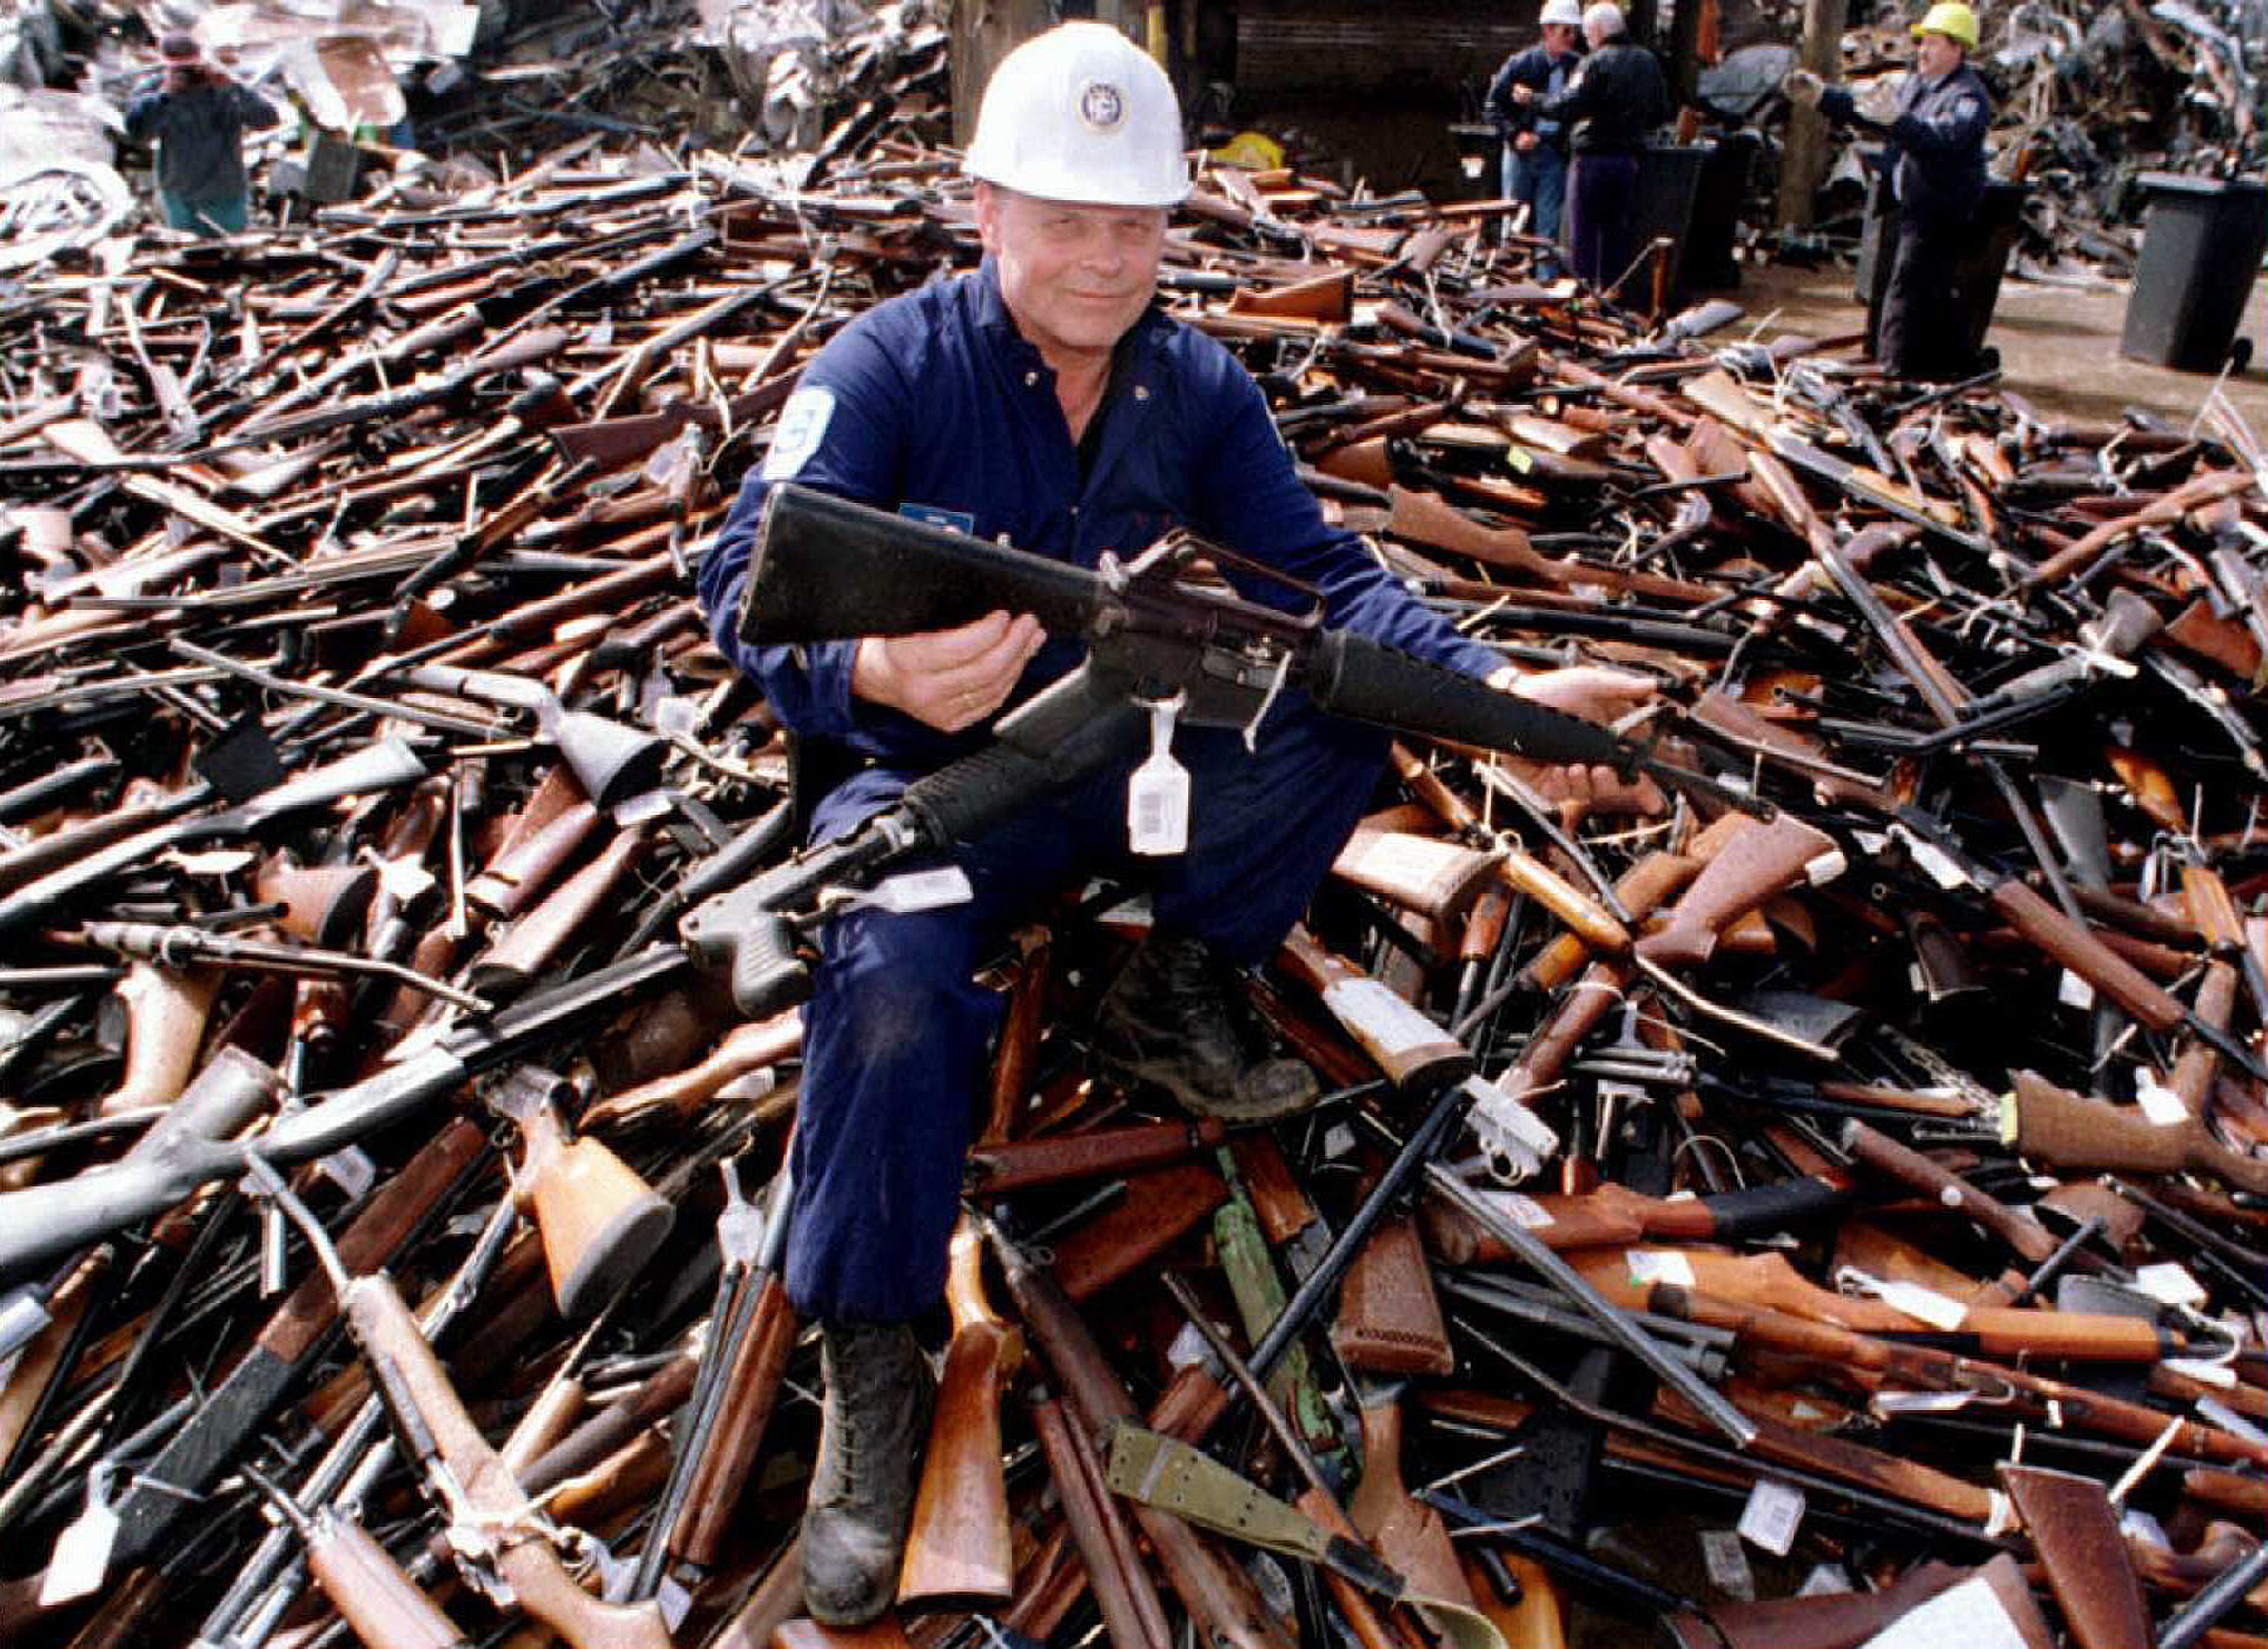 That's a lot of guns.